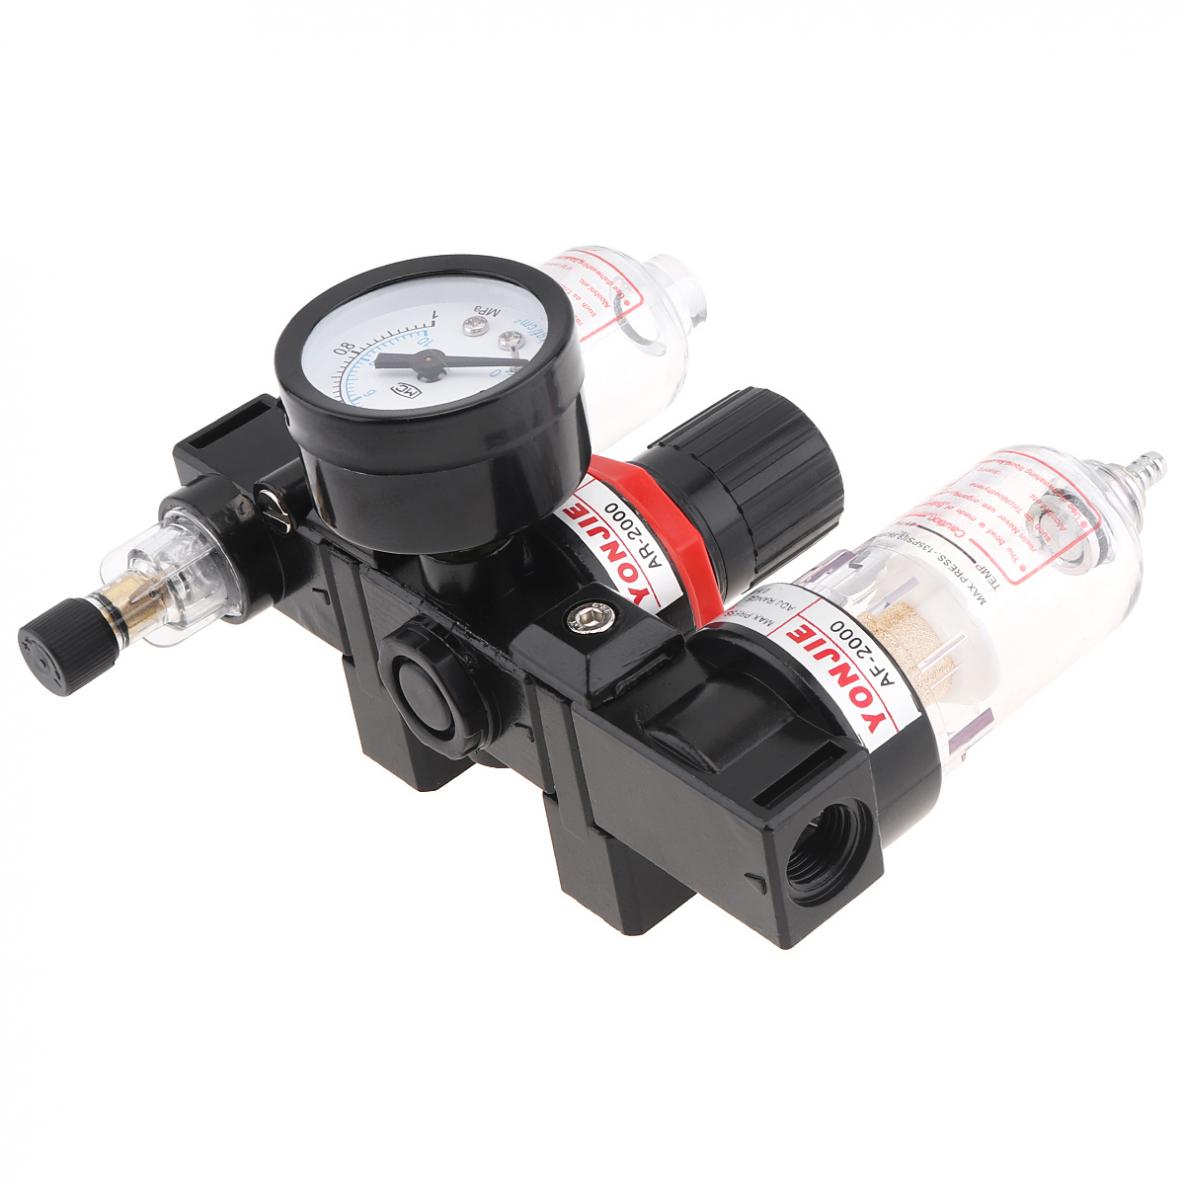 Pneumatic Parts Air Compressor 0-1.0mpa Adjustable Three Union Oil Water Separator Regulator PT1/4 mm Caliber with Gauge